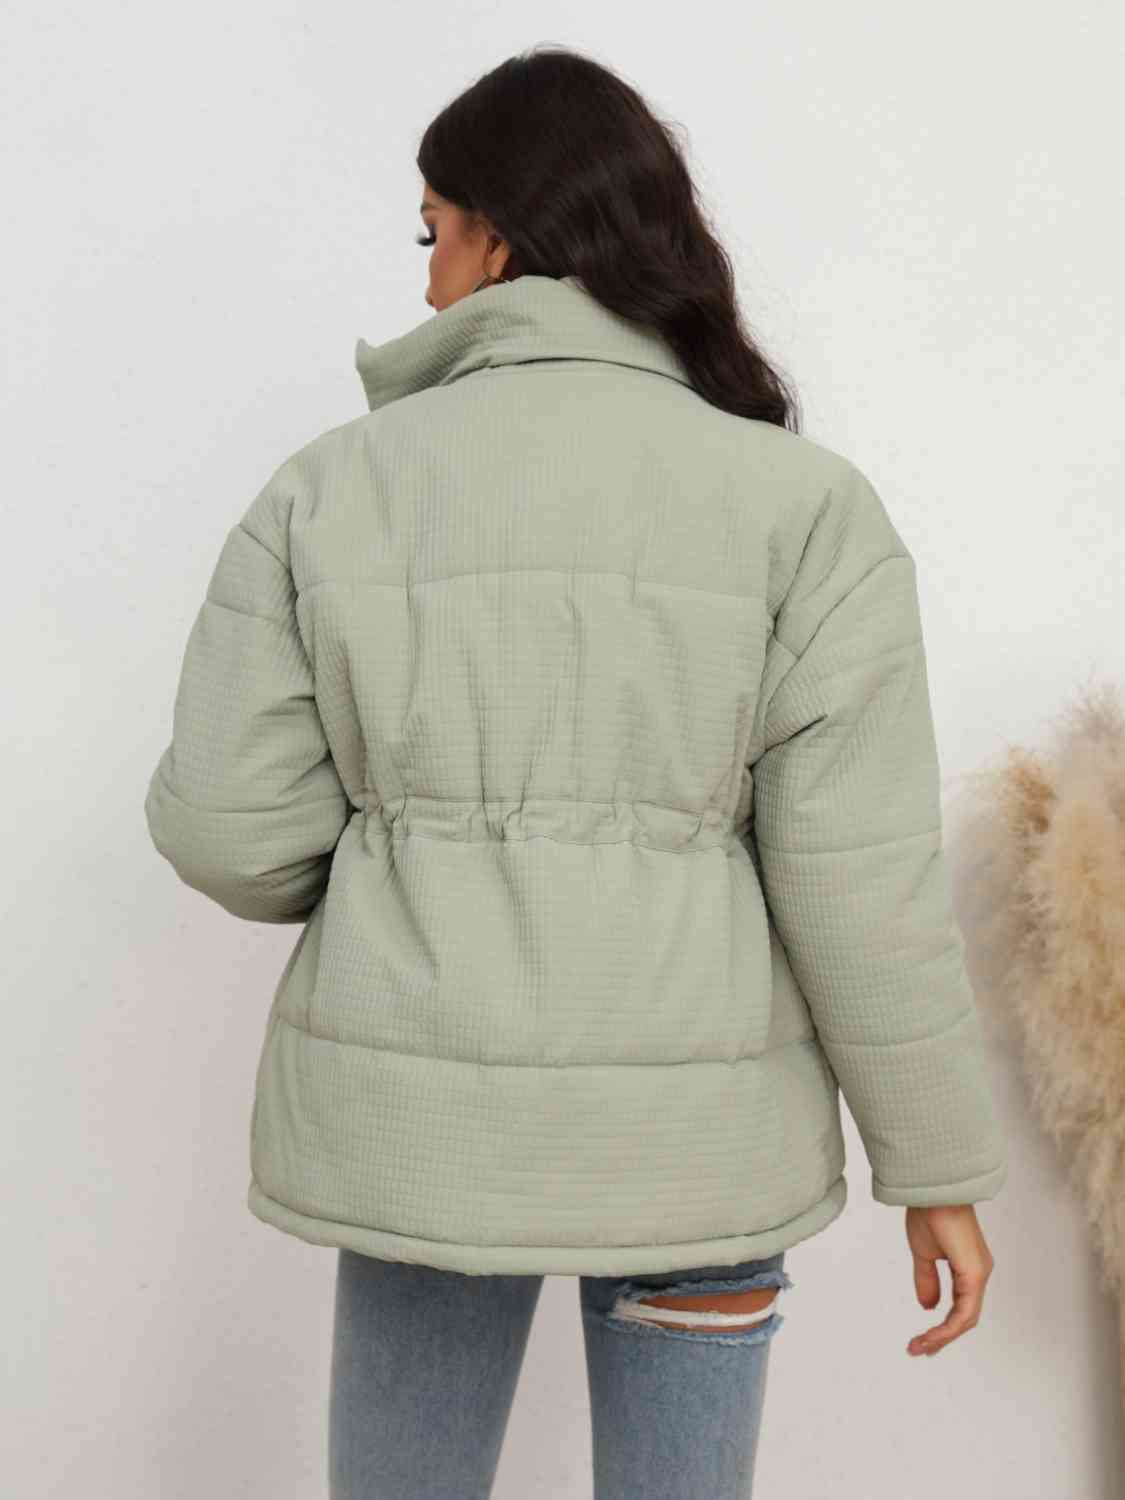 Light Green Drawstring Waist Zip-Up Puffer Jacket in Size S, M, L, XL, or 2X